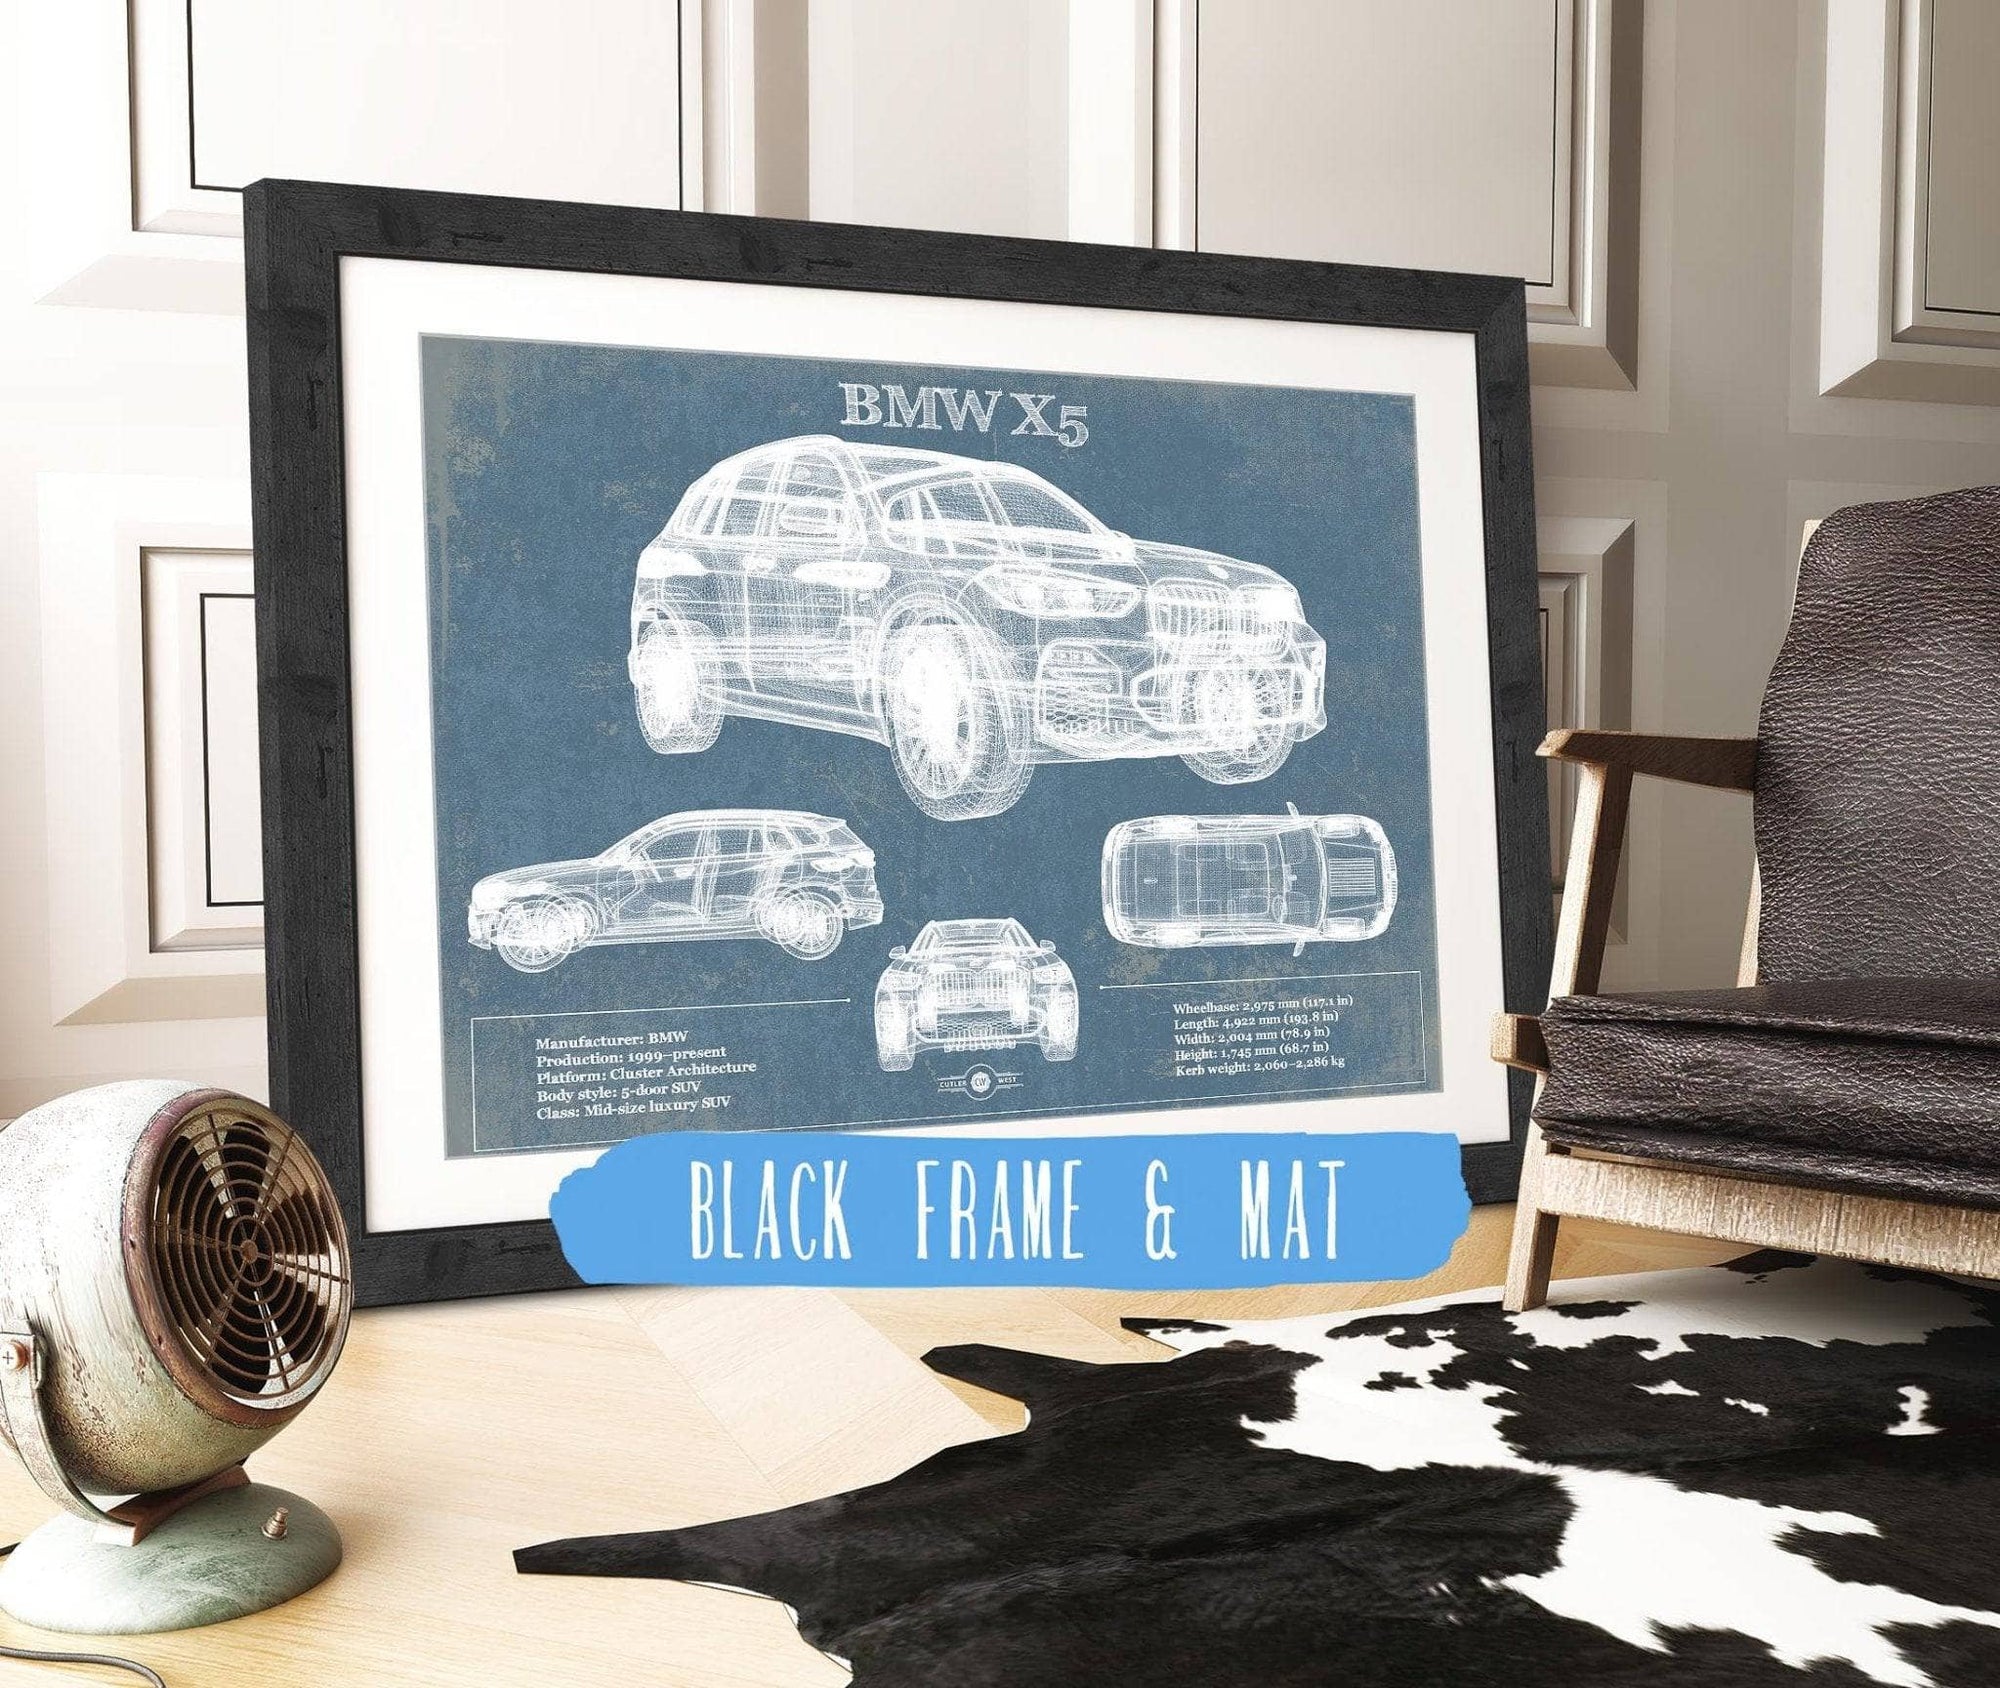 Cutler West Vehicle Collection 14" x 11" / Black Frame & Mat BMW X5 Vintage Blueprint Auto Print 833110089